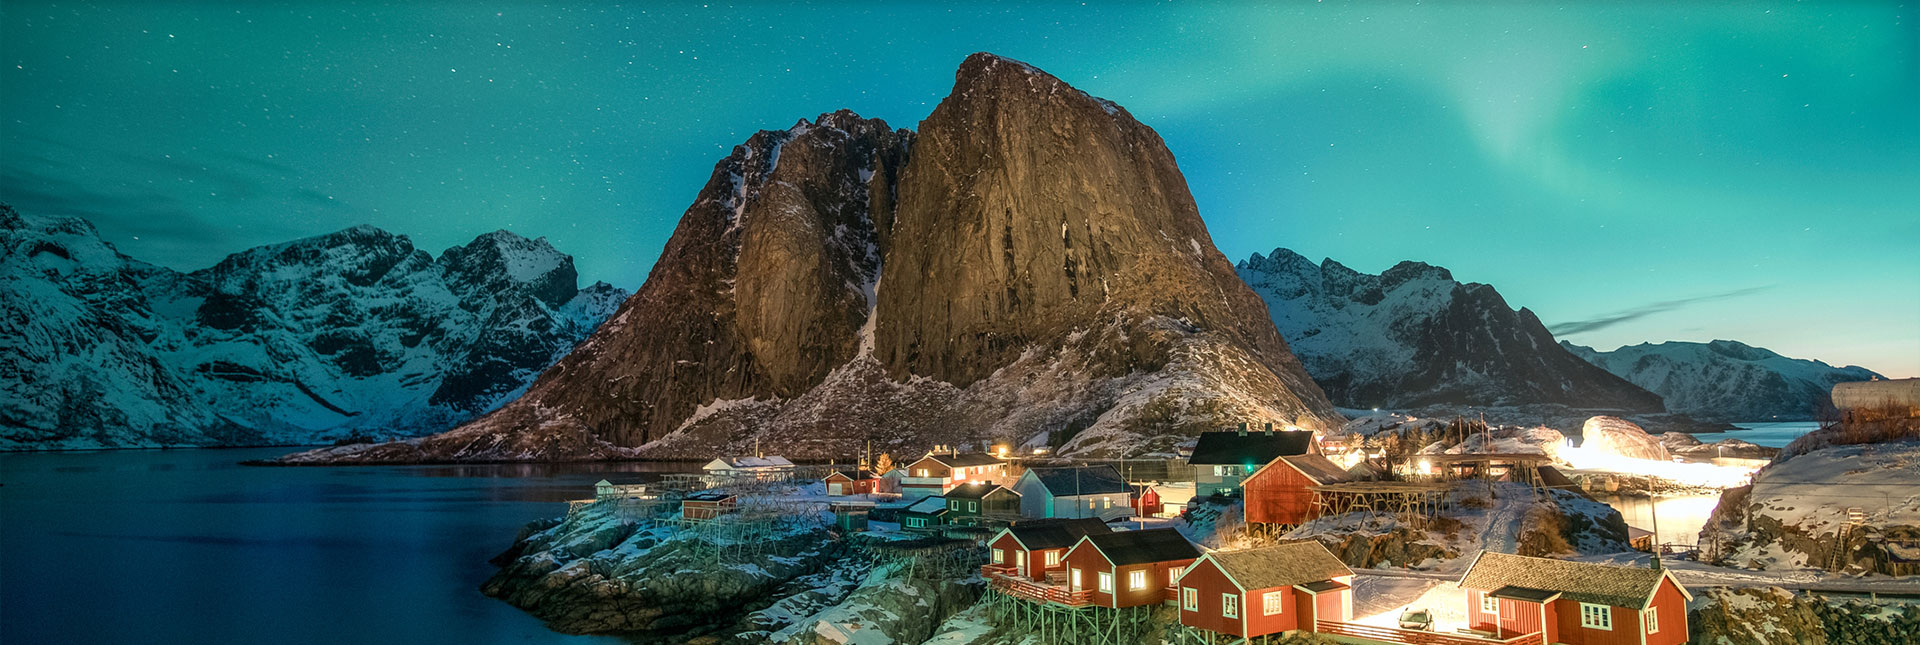 Northern Lights Norway